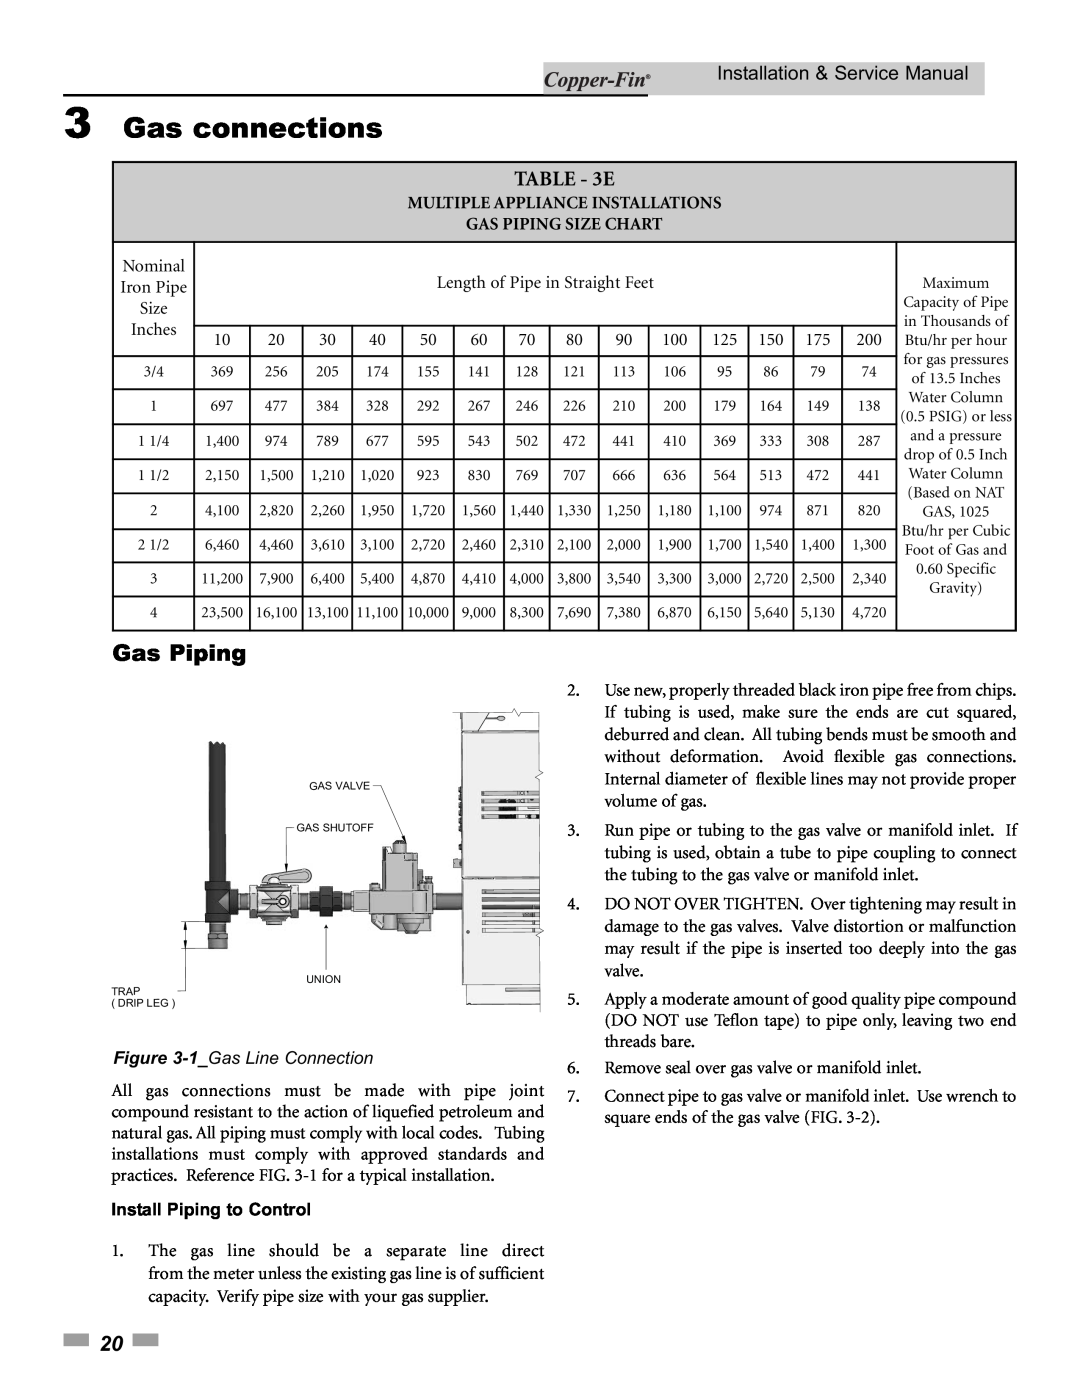 Lochinvar 500, 90 service manual Gas Piping, E, 3Gas connections, Installation & Service Manual, 1_GasLine Connection 